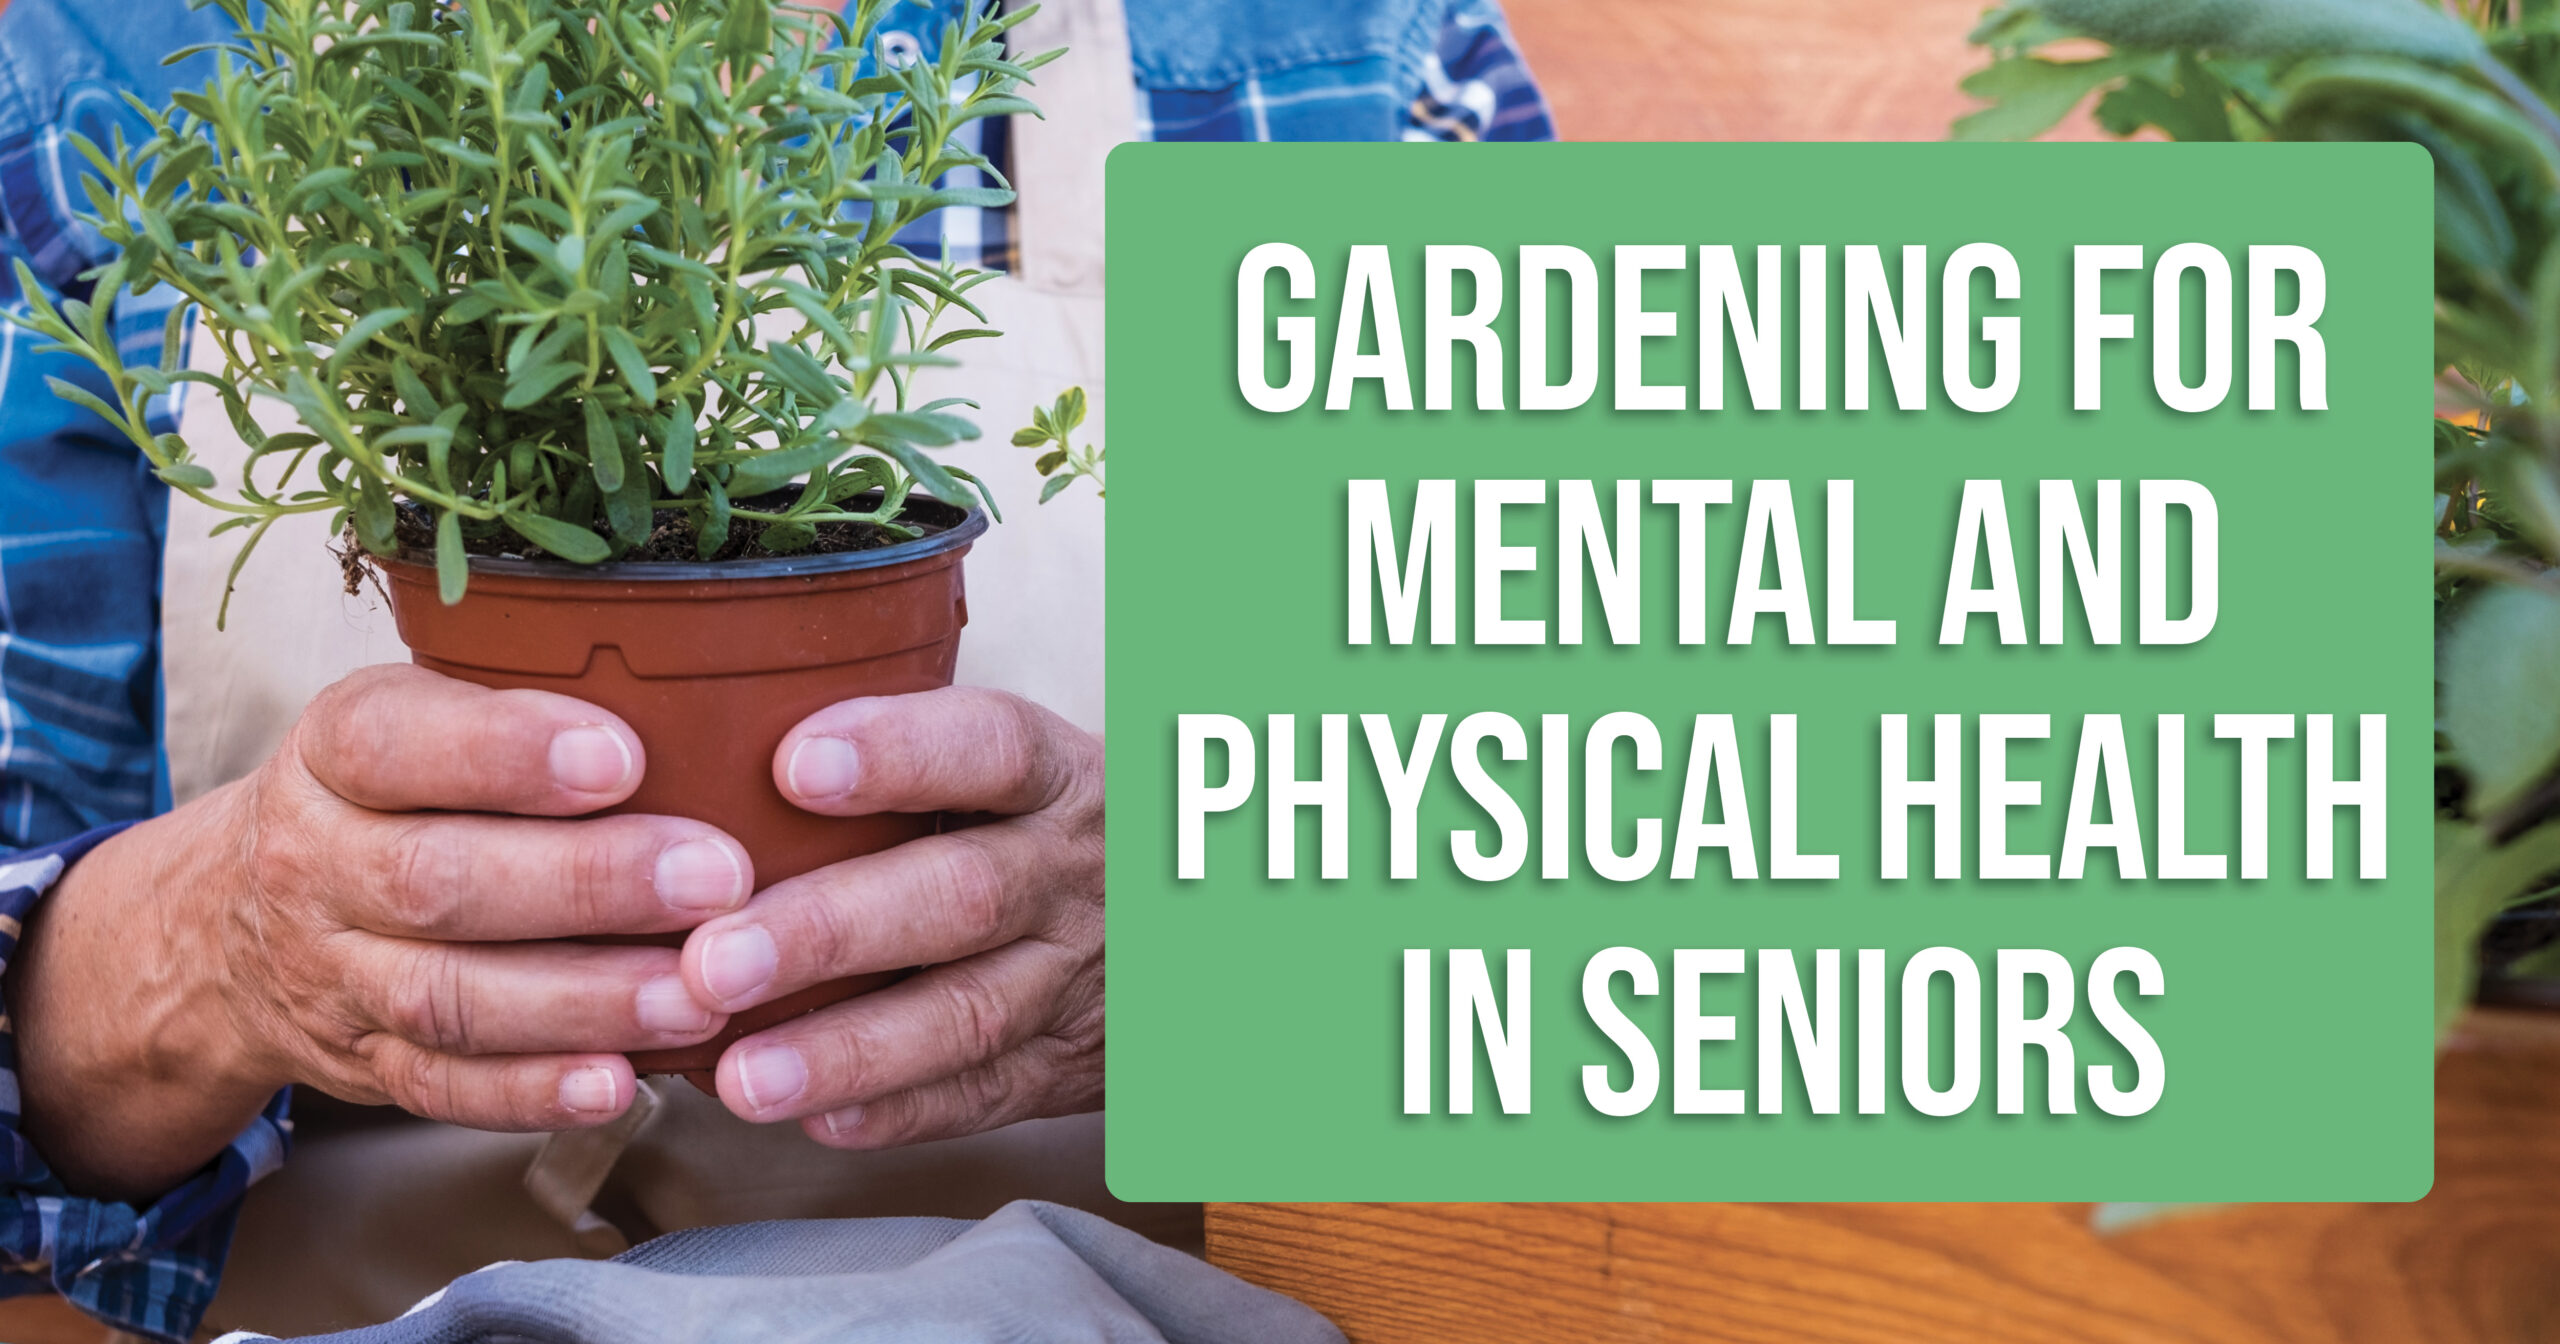 Gardening for Health in Seniors Graphic